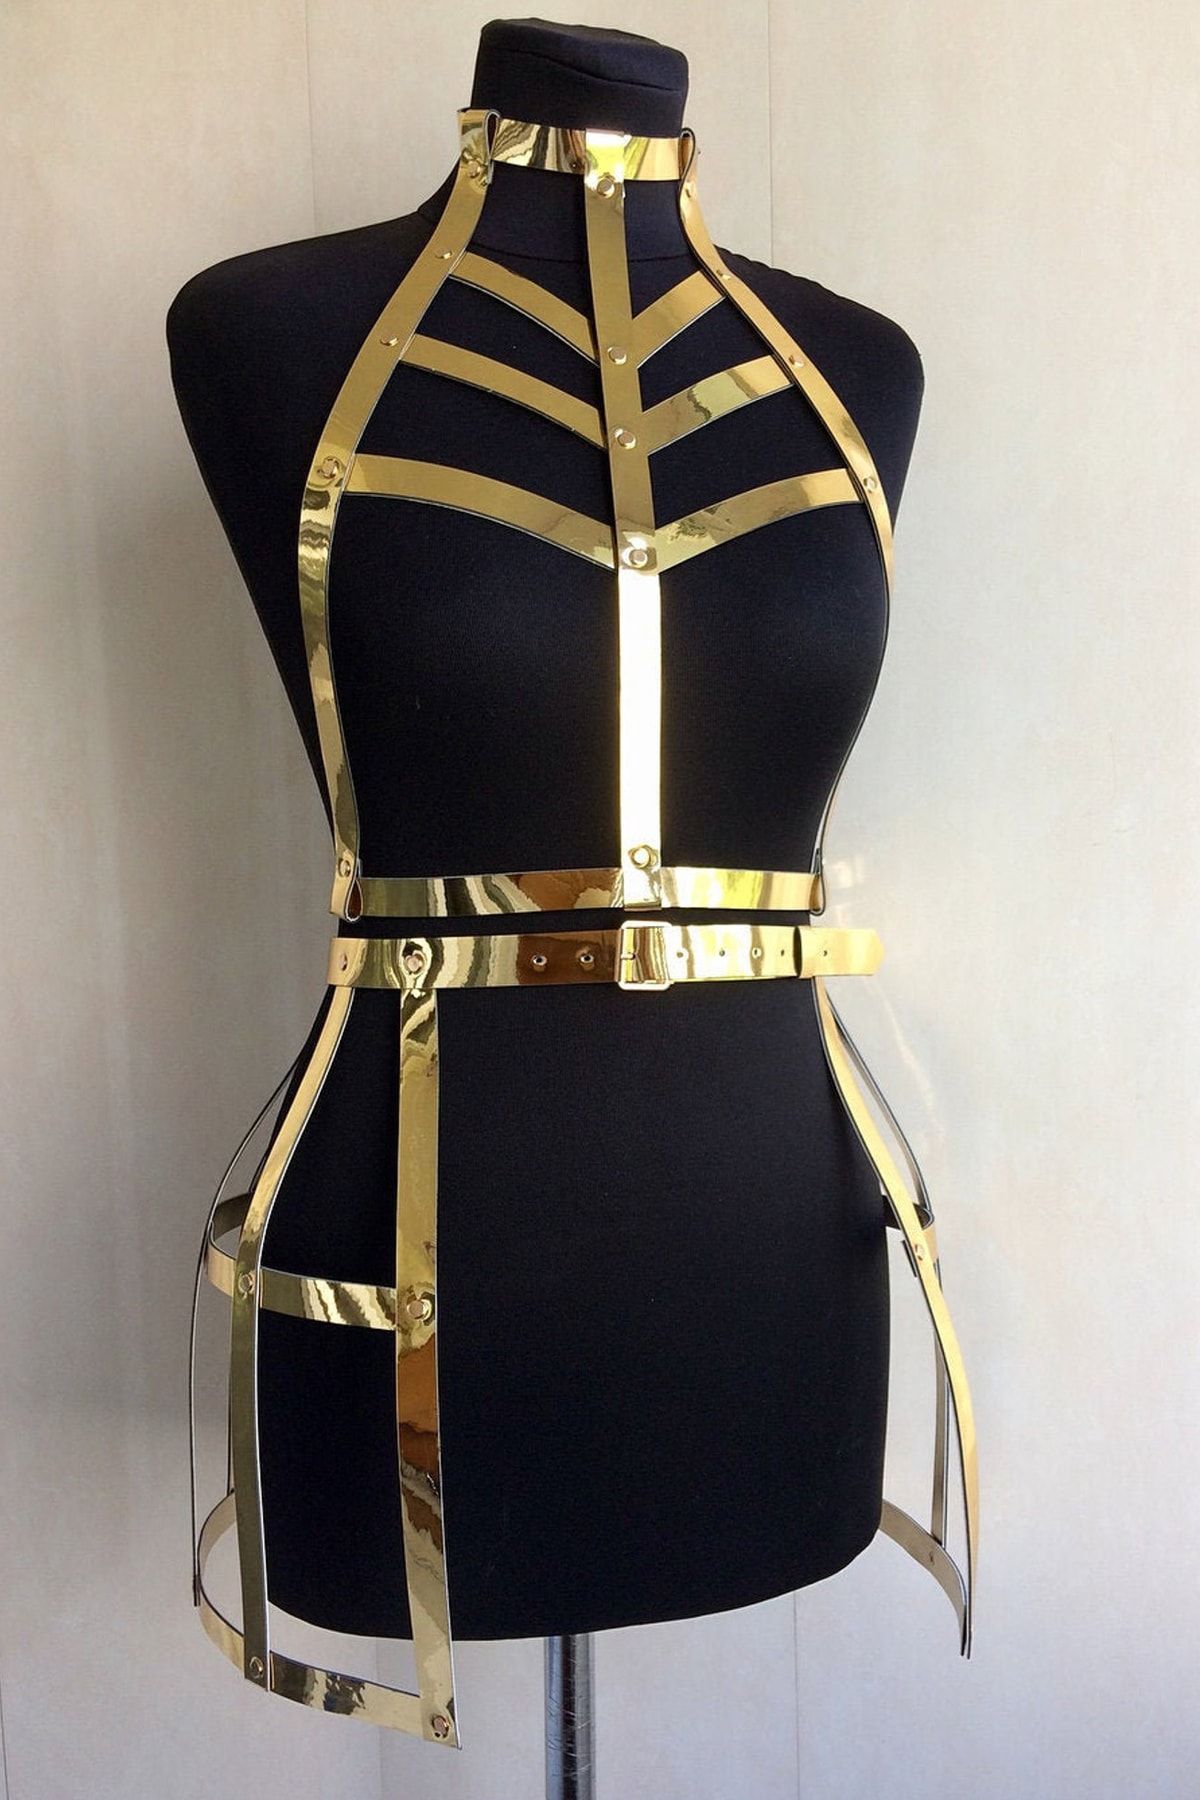 Tina Wear Kadın Gold Harness Fantezi Deri Vücut Aksesuar 700807